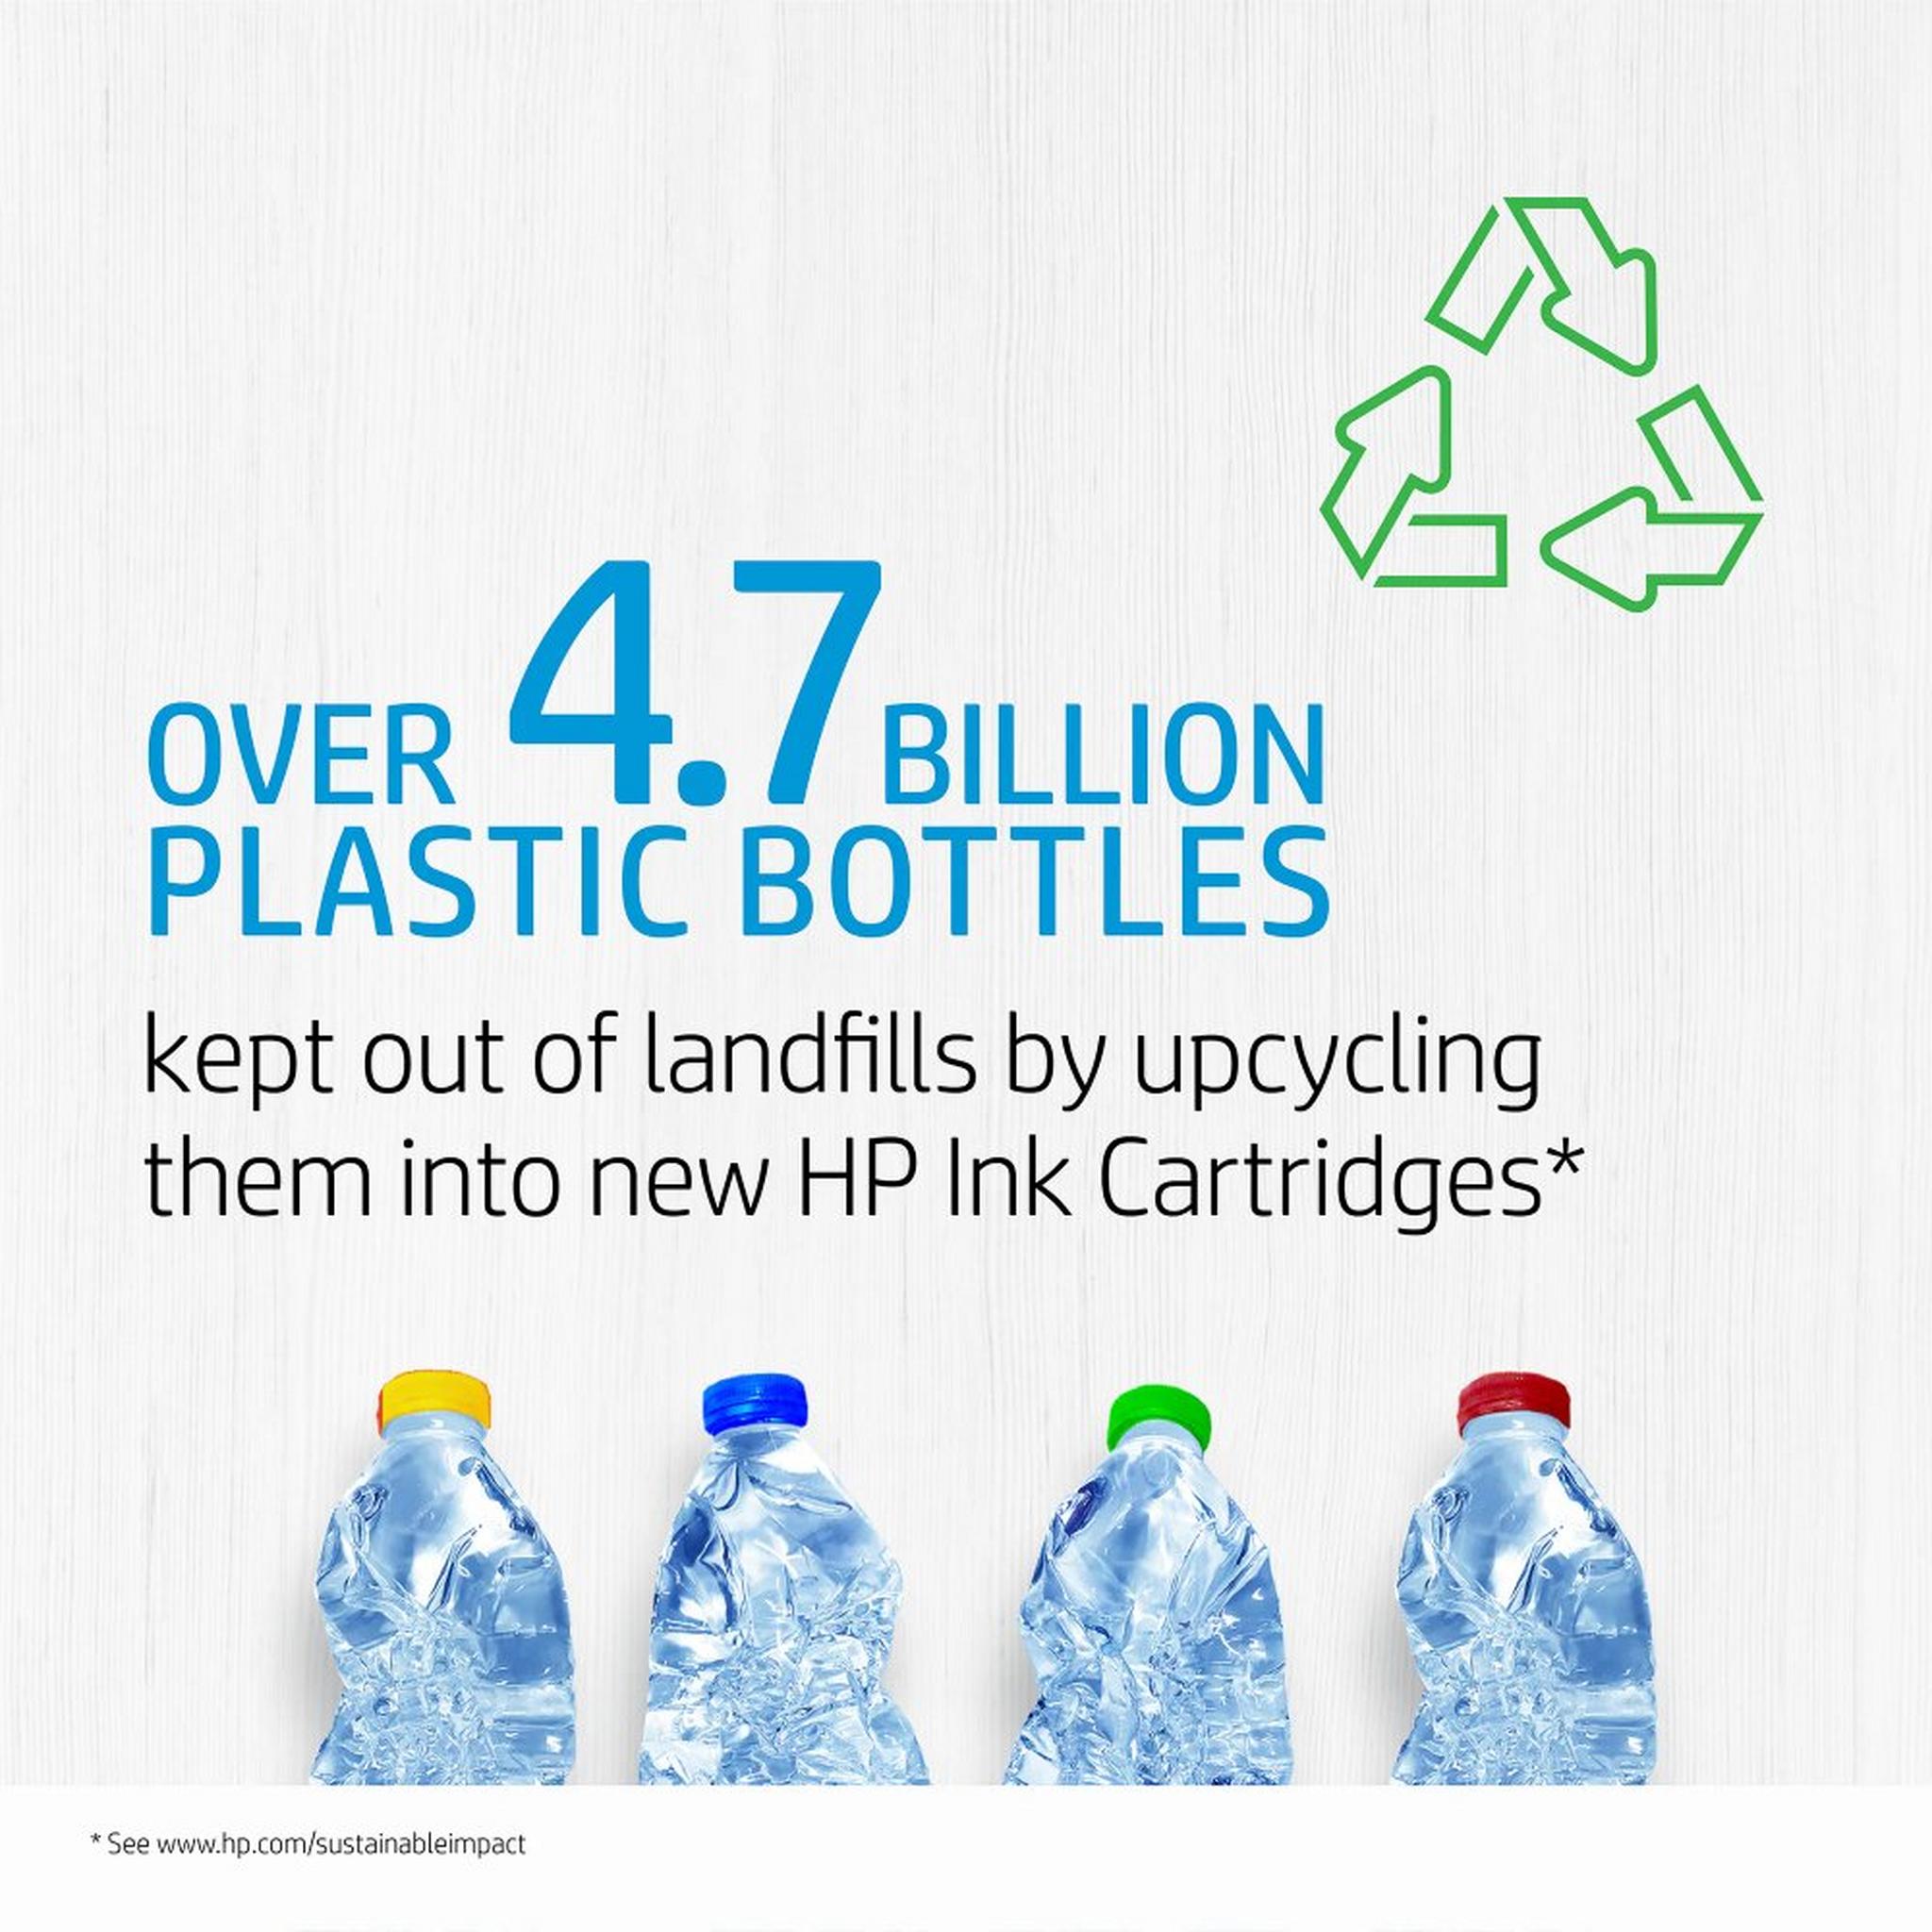 HP Inkjet 953XL High Yield Printer Cartridge - Yellow